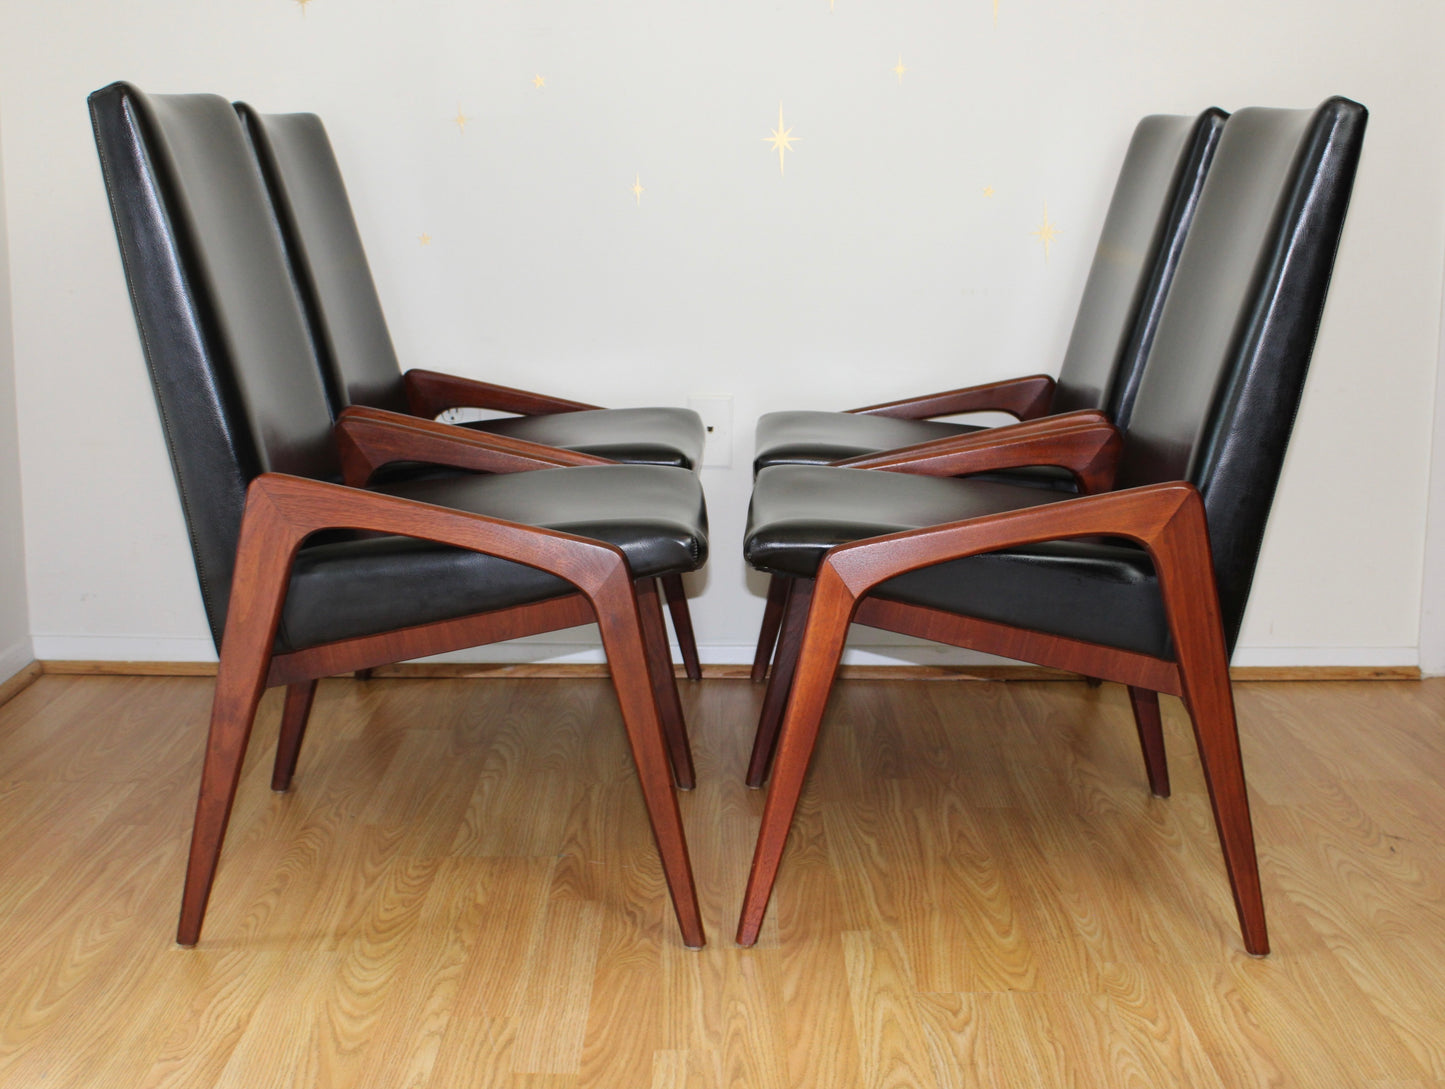 Danish Modern Teak Dining Chairs